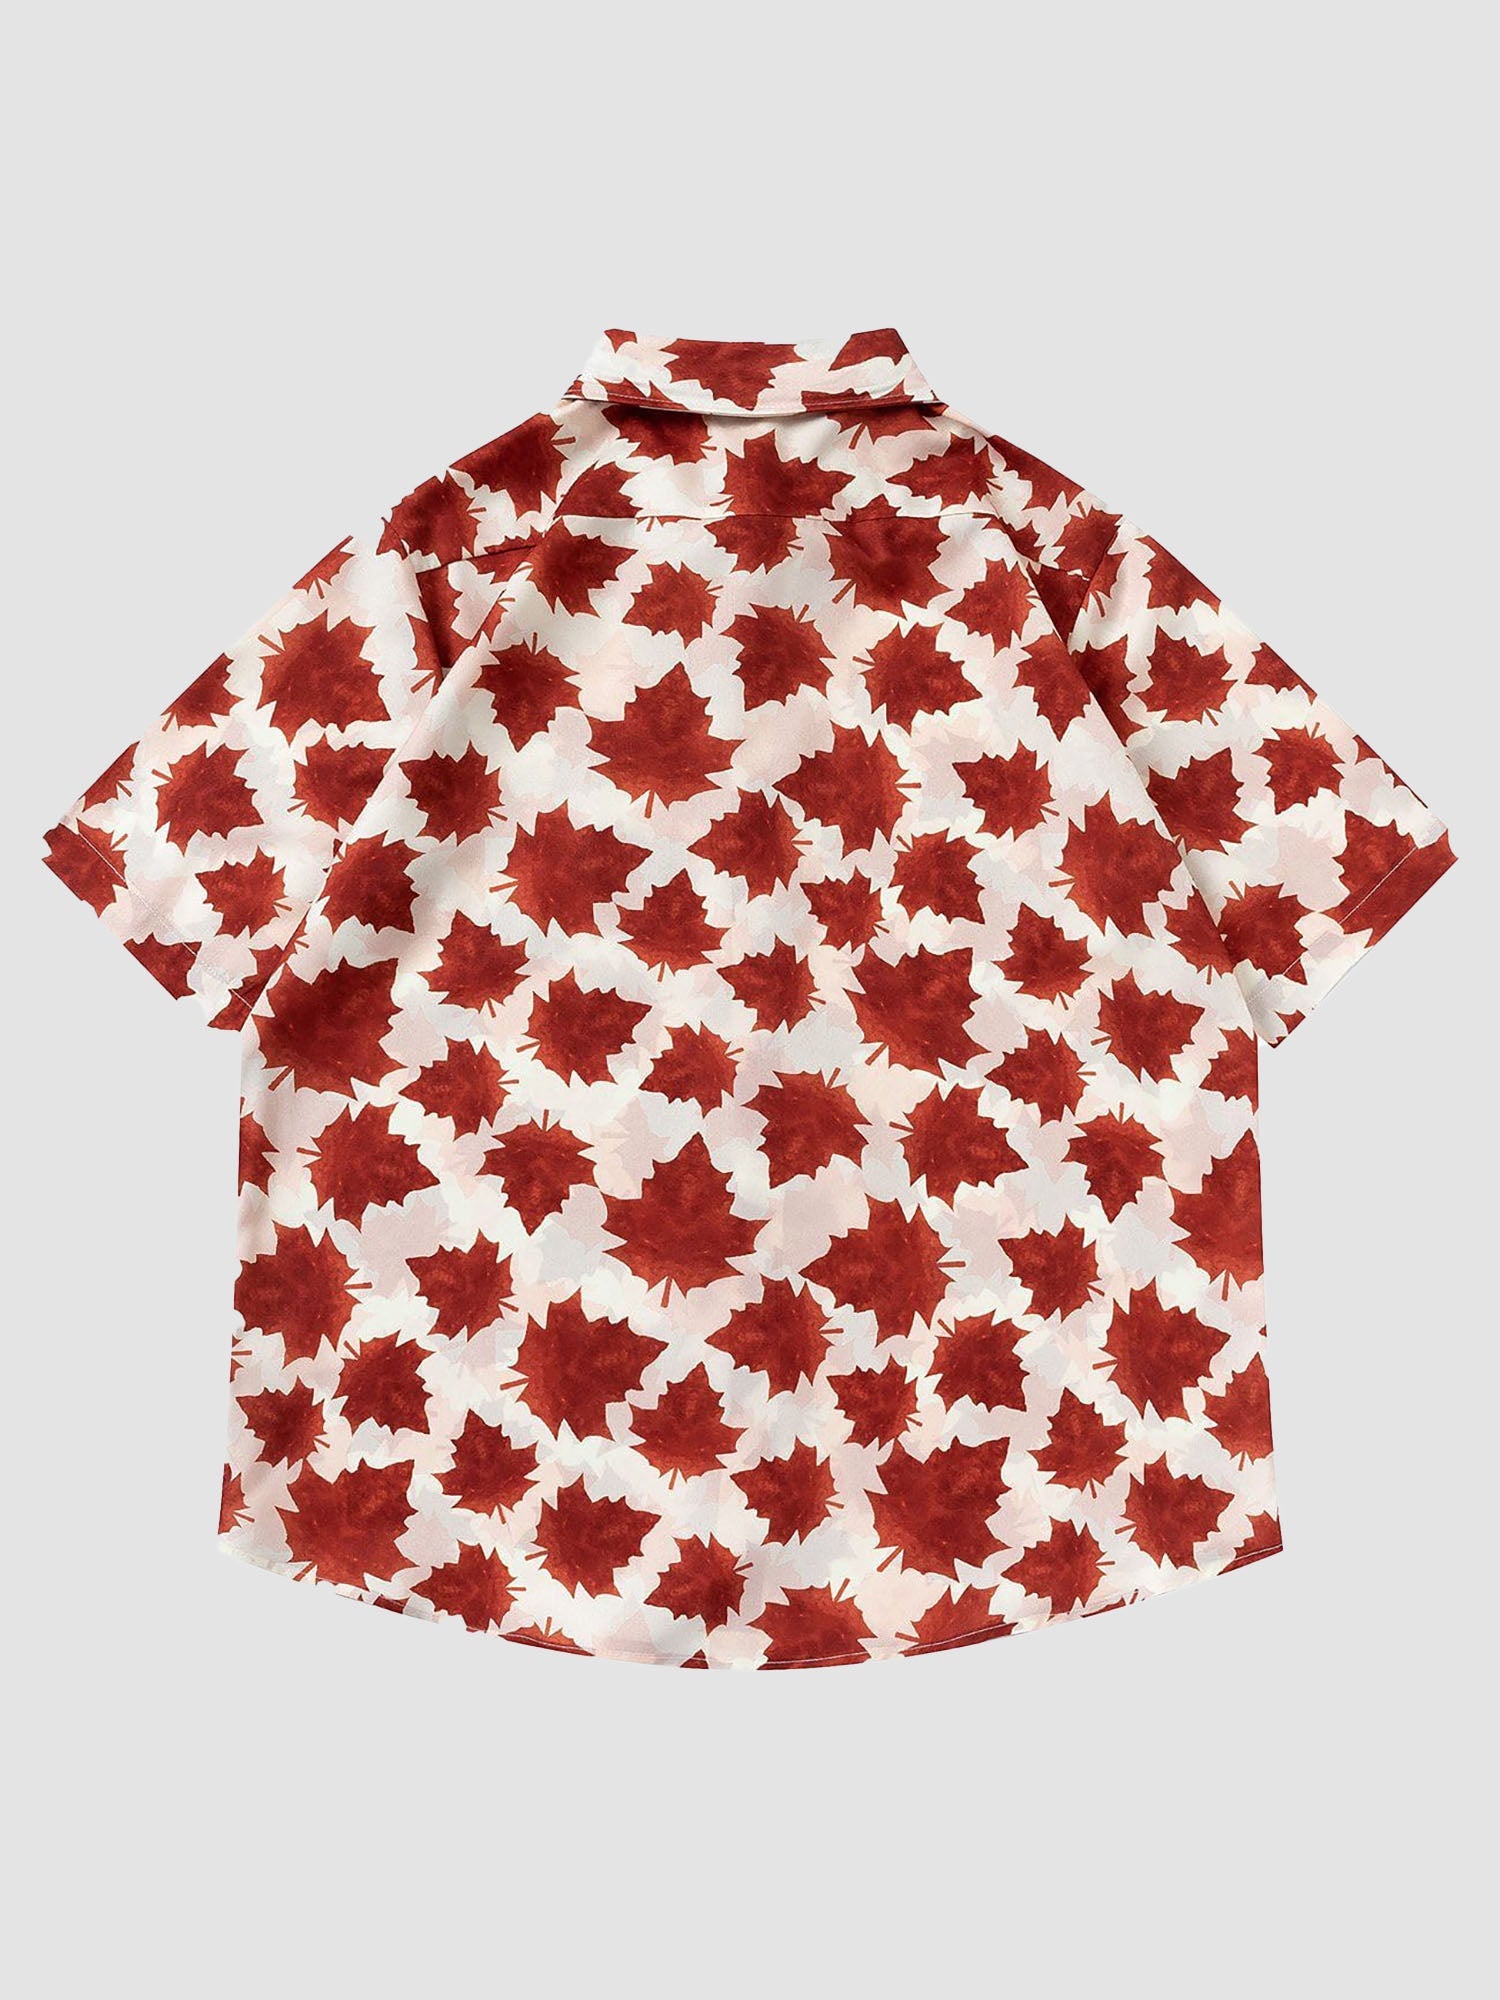 JUSTNOTAG Full Maple Leaf Print Short Sleeve Shirts